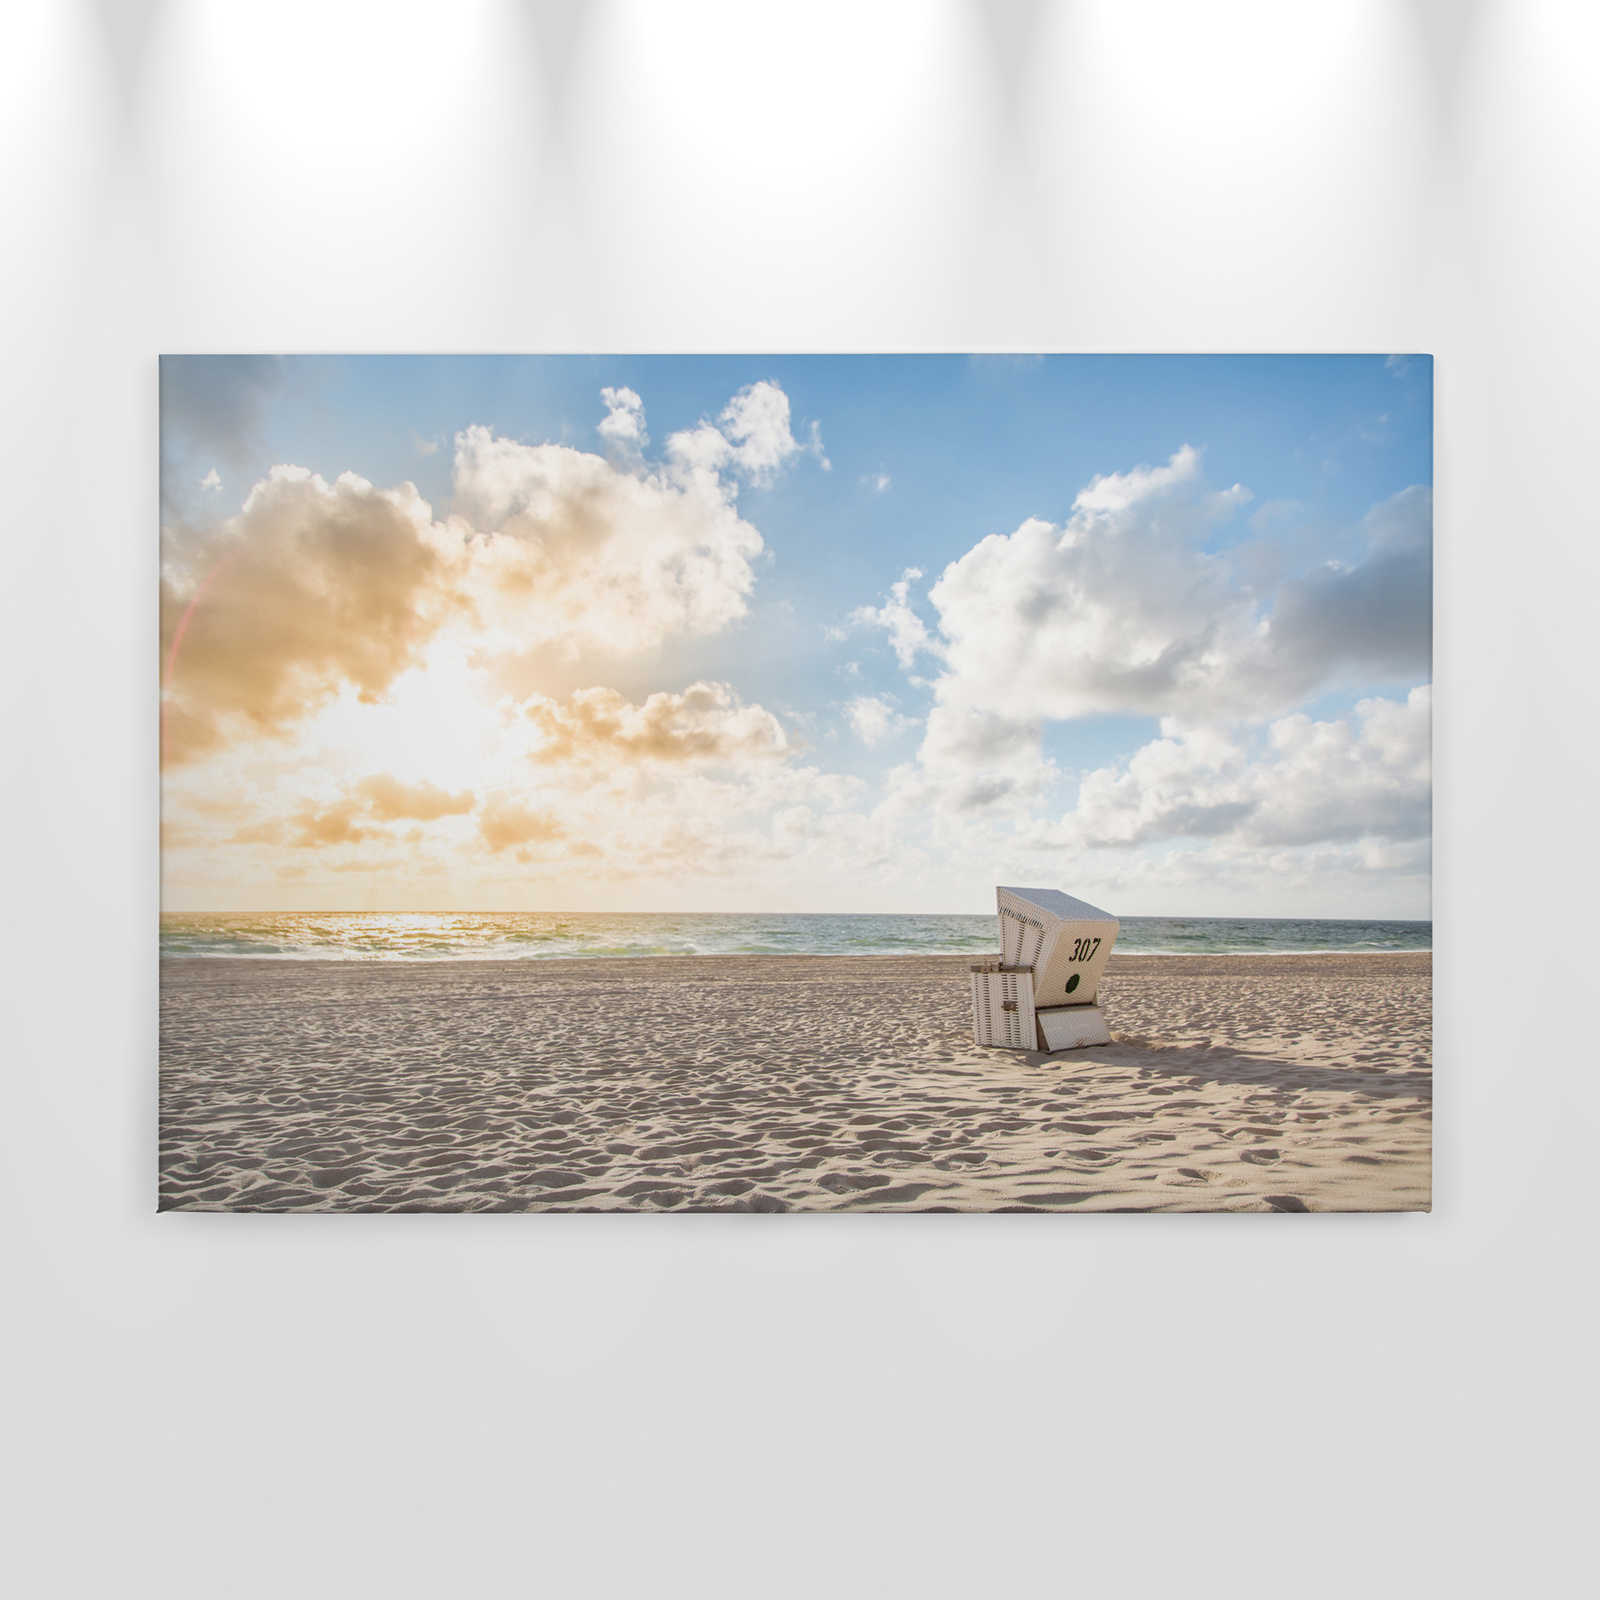             Canvas with beach chair at sunrise - 0.90 m x 0.60 m
        